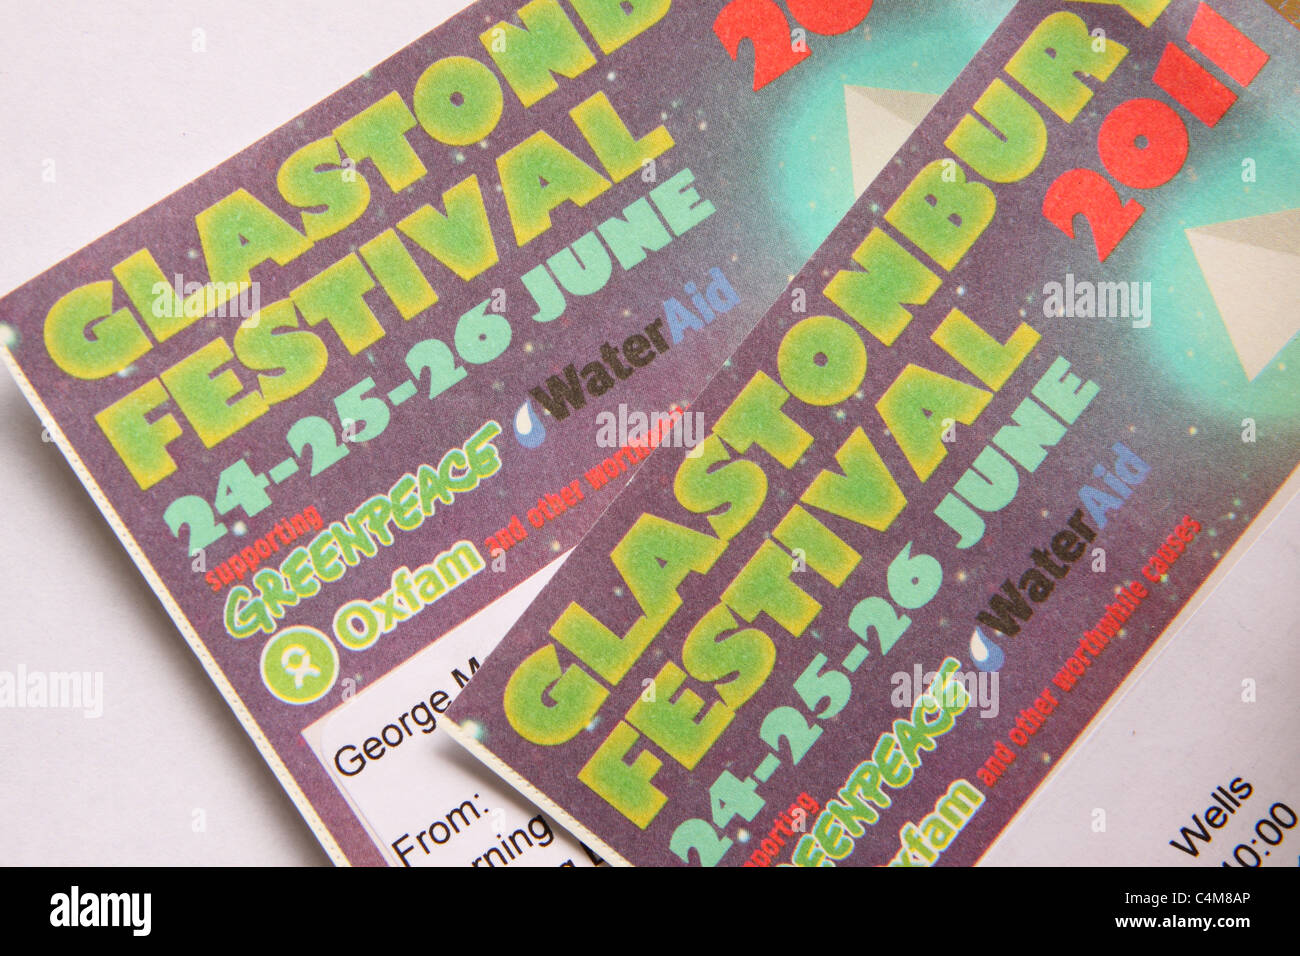 Glastonbury Festival ticket tickets Stock Photo